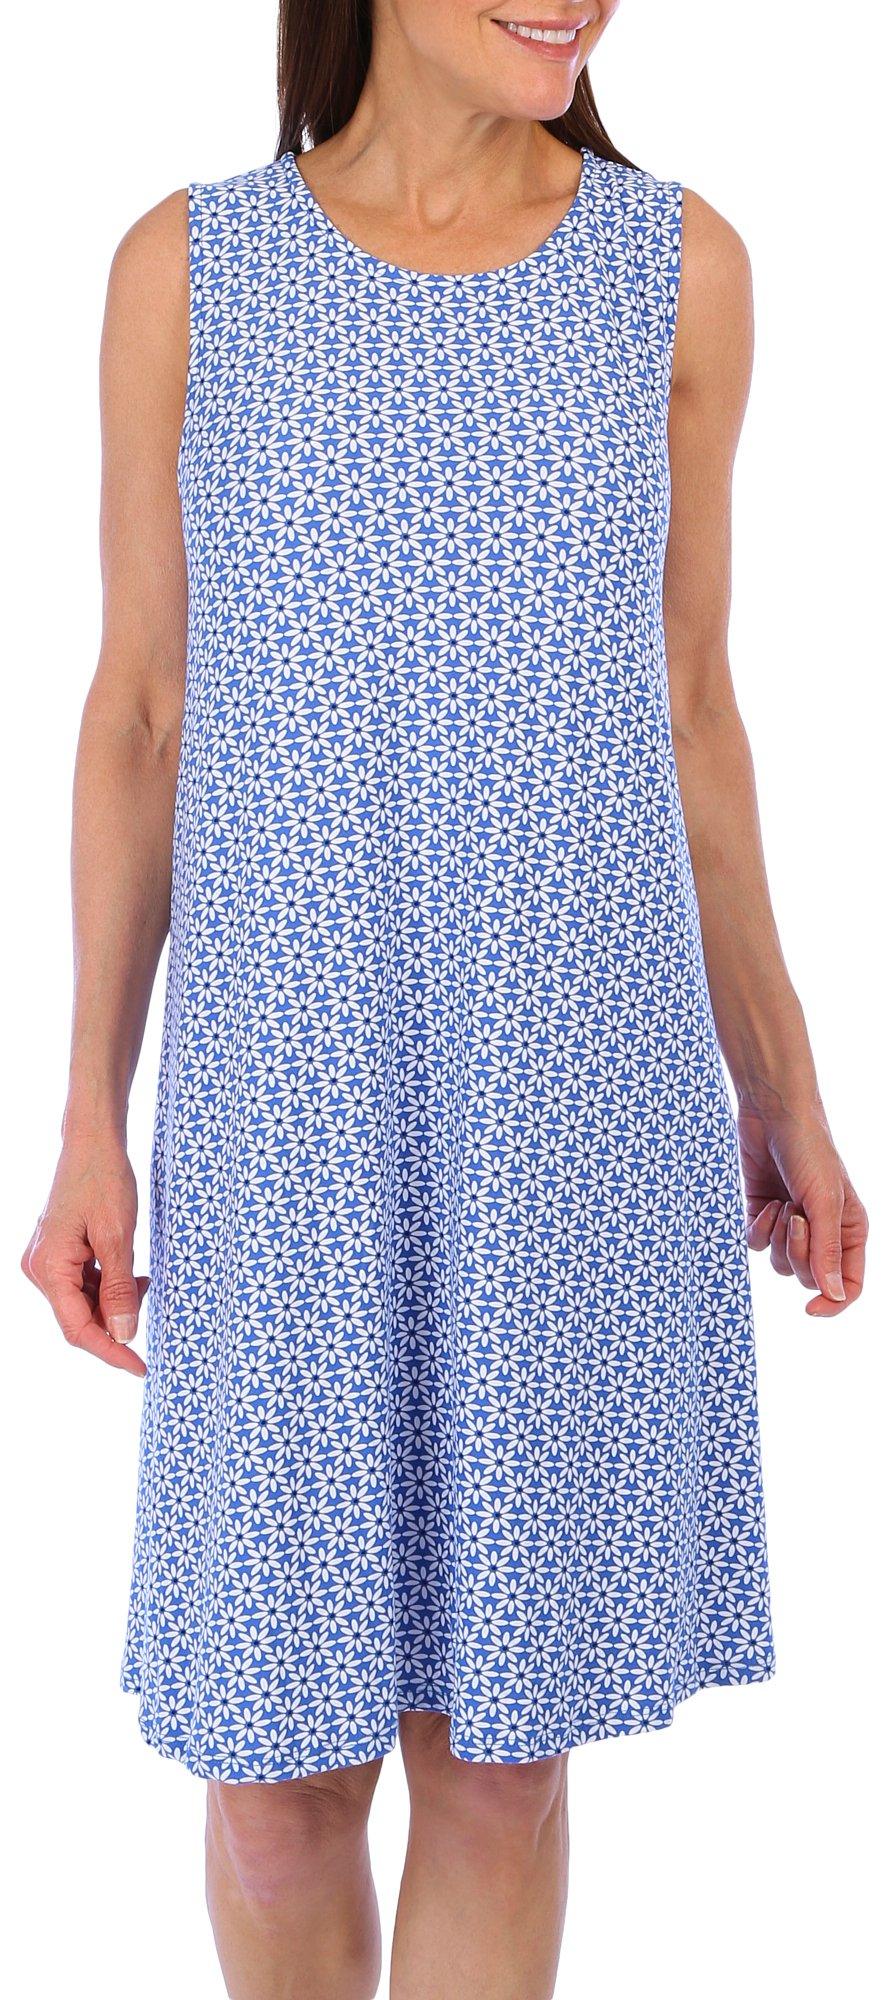 Allison Brittney Womens Daisy Print Sleeveless Dress